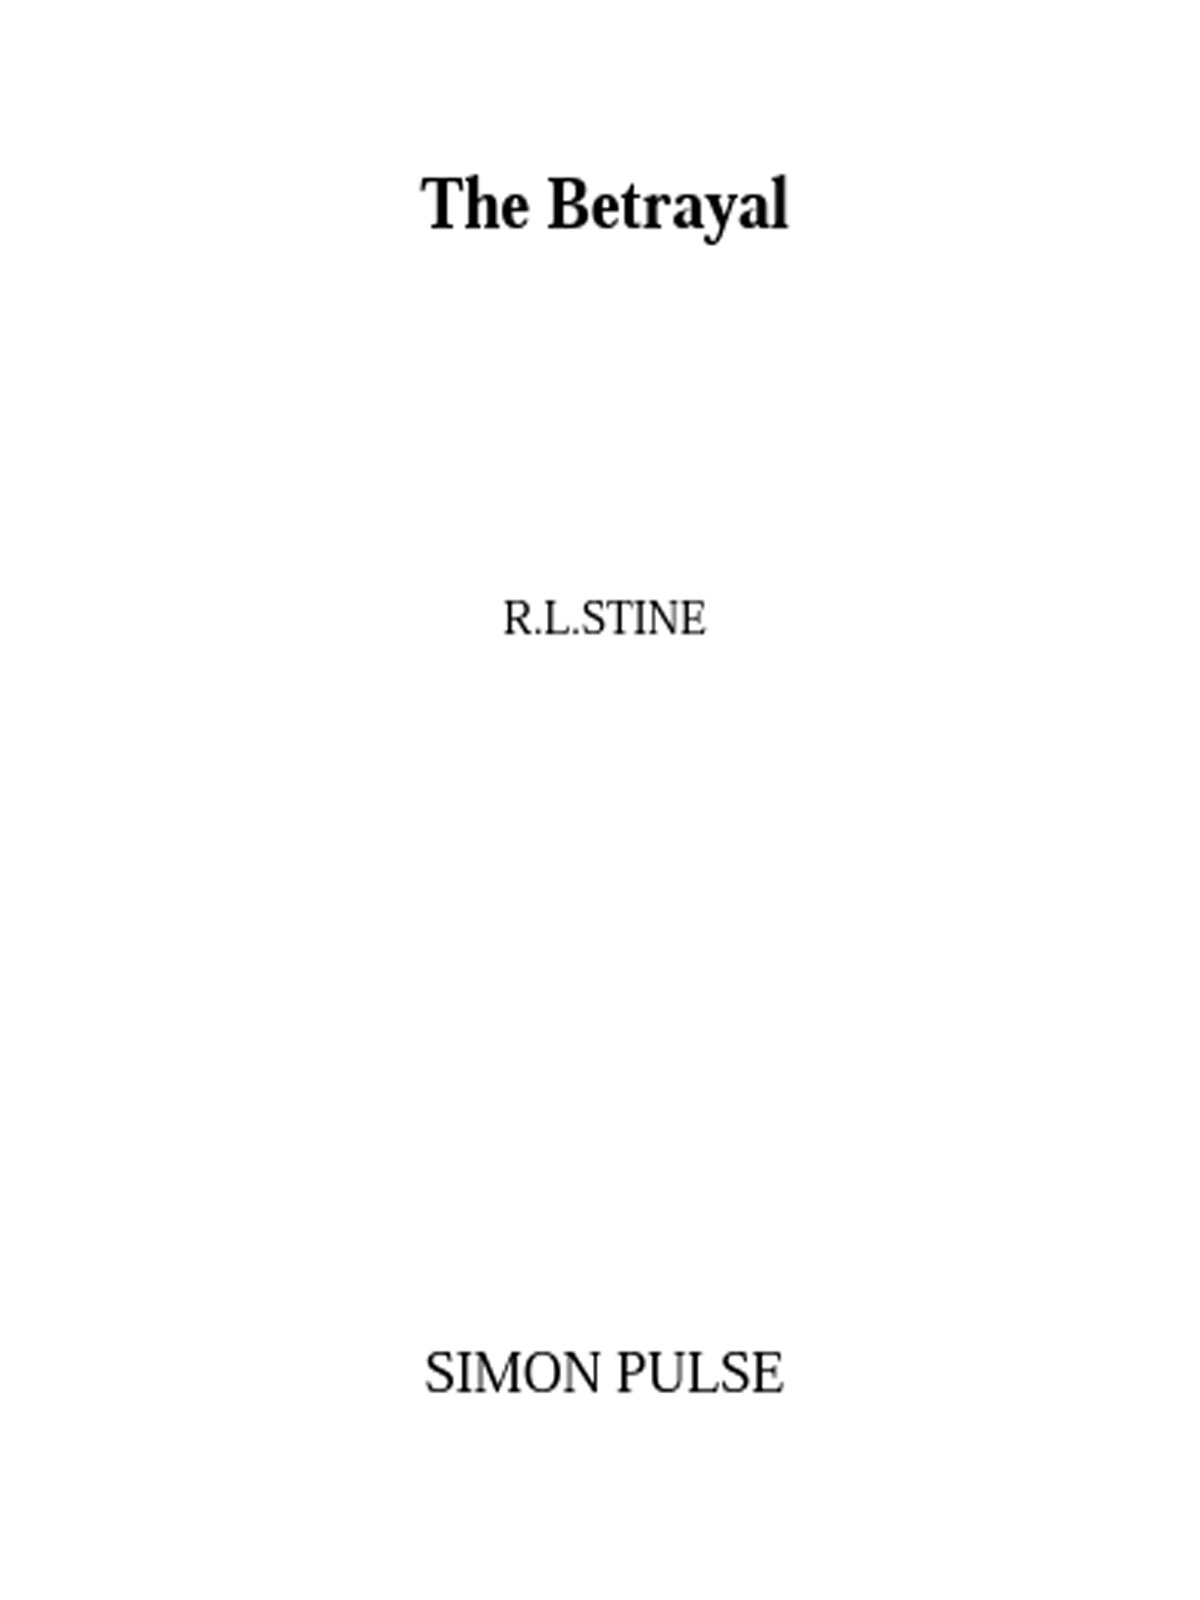 The Betrayal (1993) by R.L. Stine